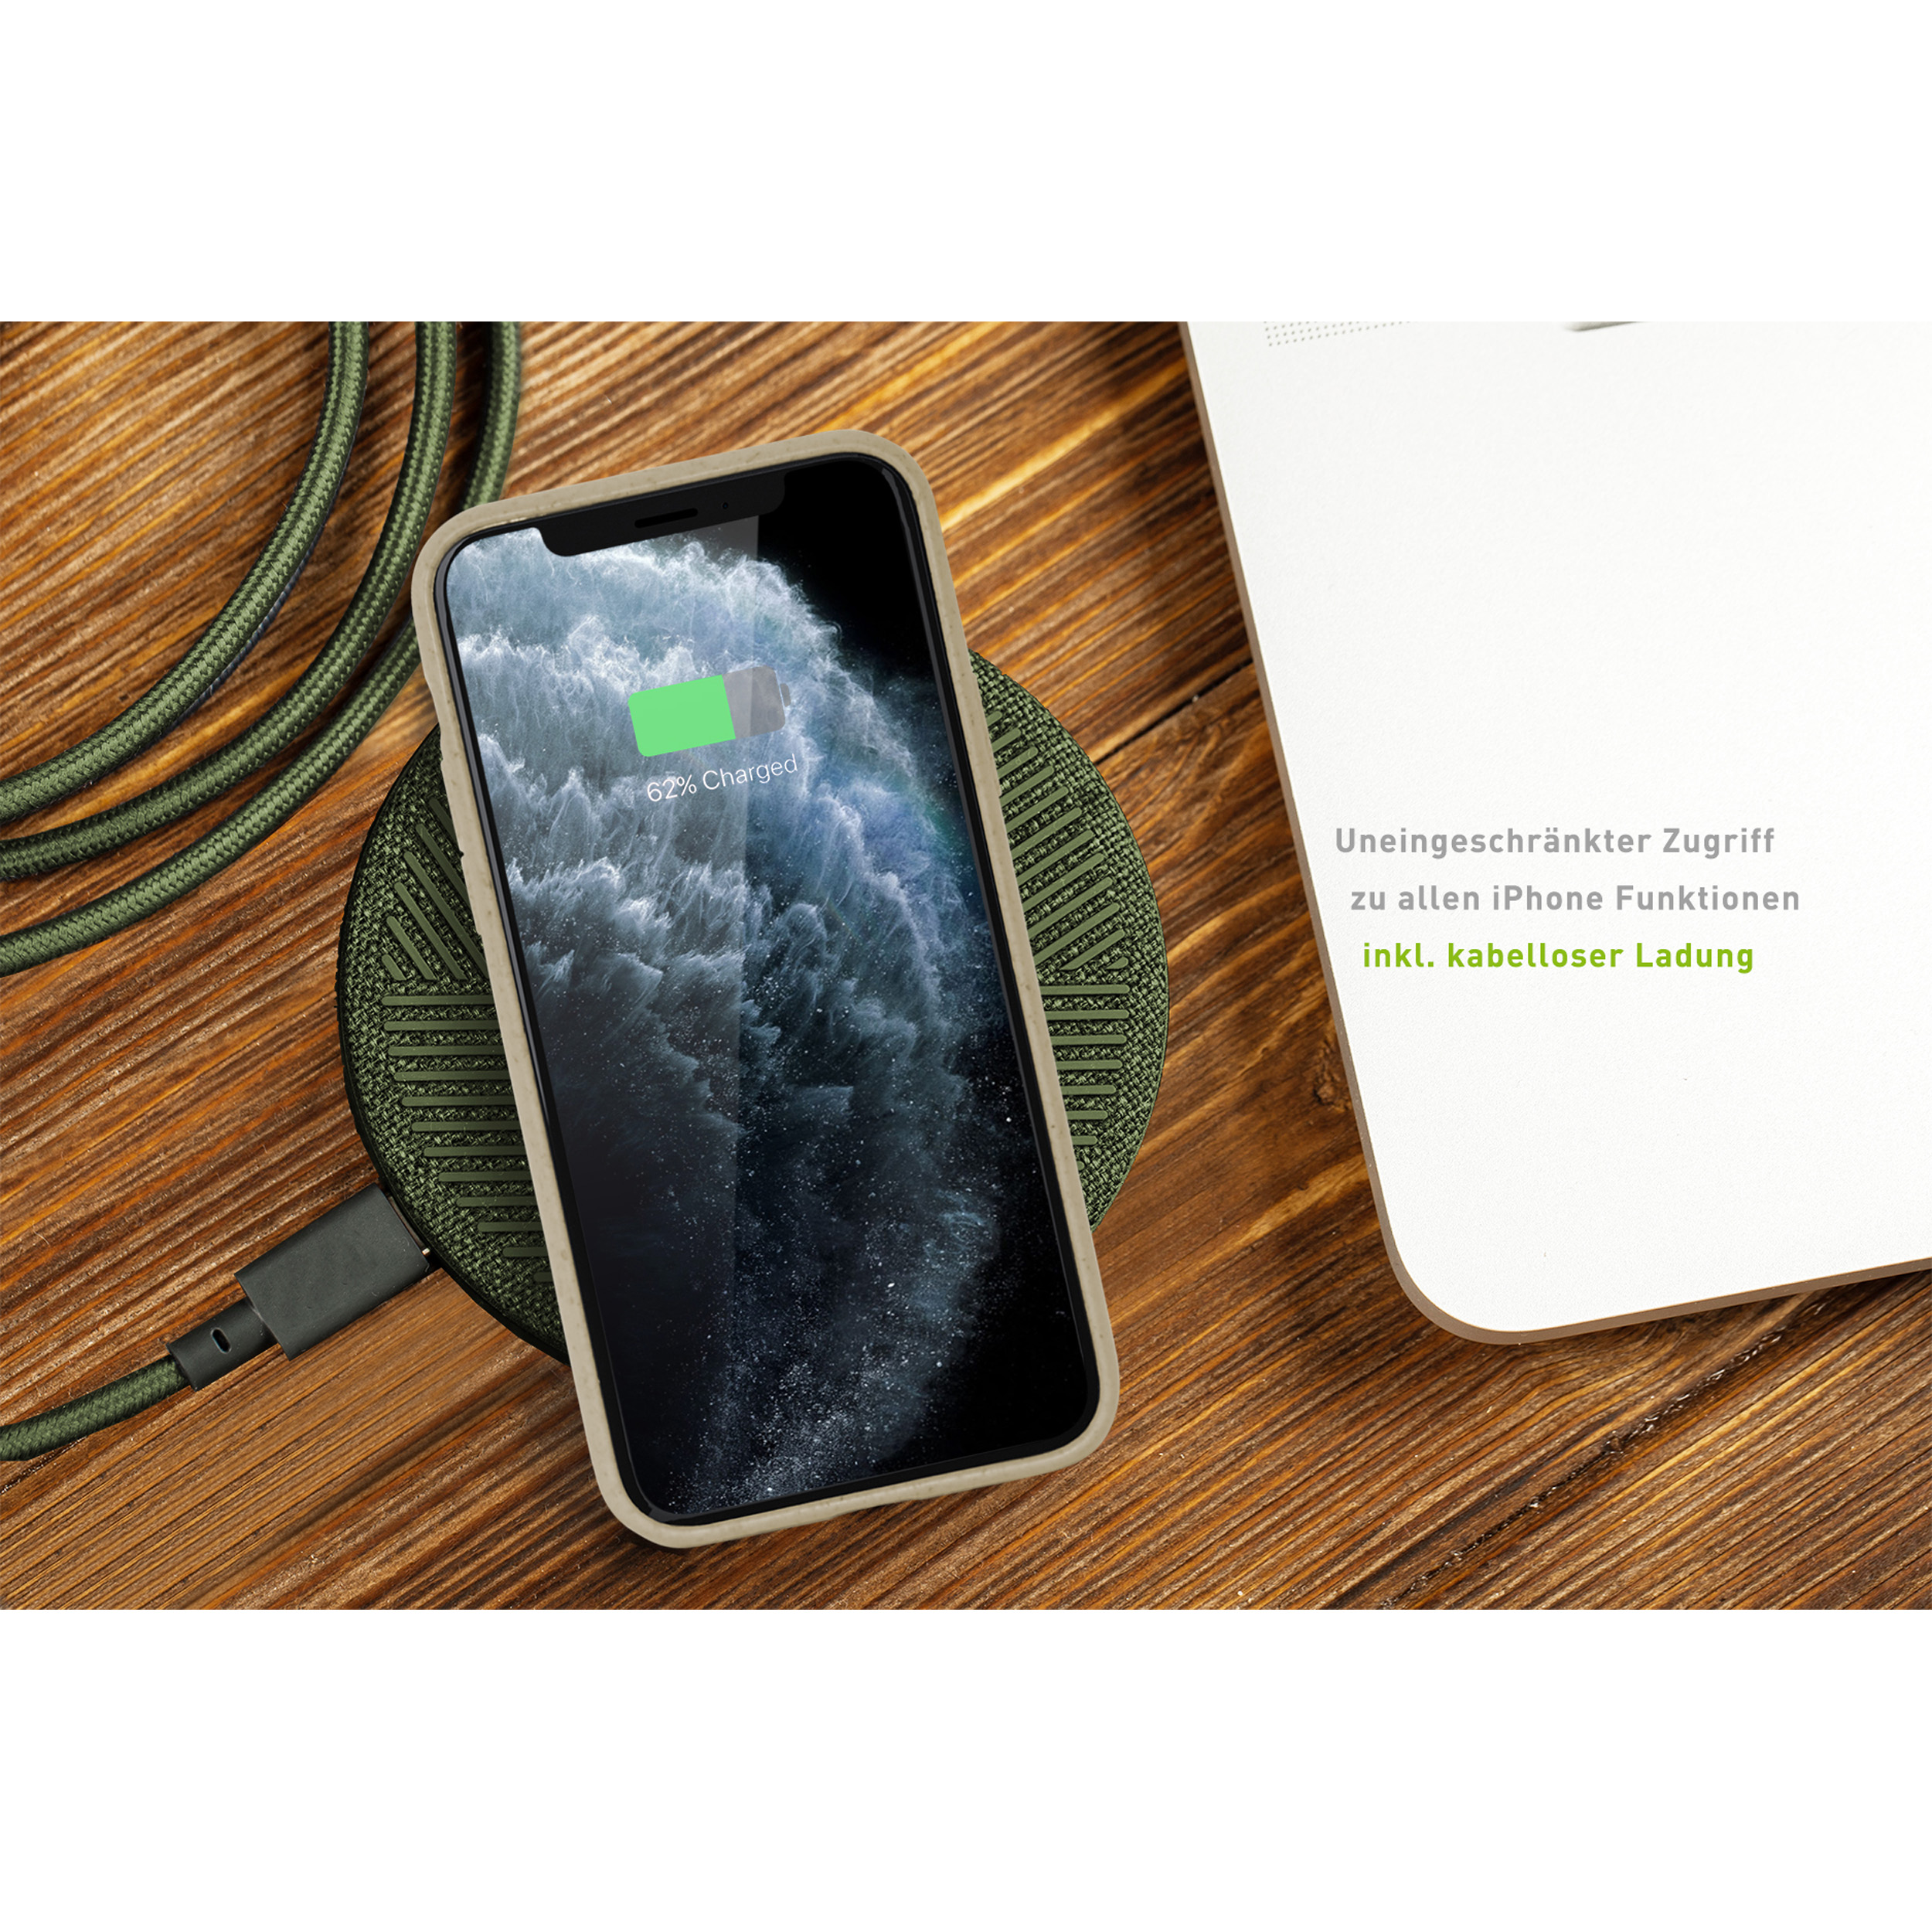 KMP Pro Apple, beige Biologisch-abbaubare Backcover, iPhone Beige, für Pro, 11 11 iPhone Schutzhülle